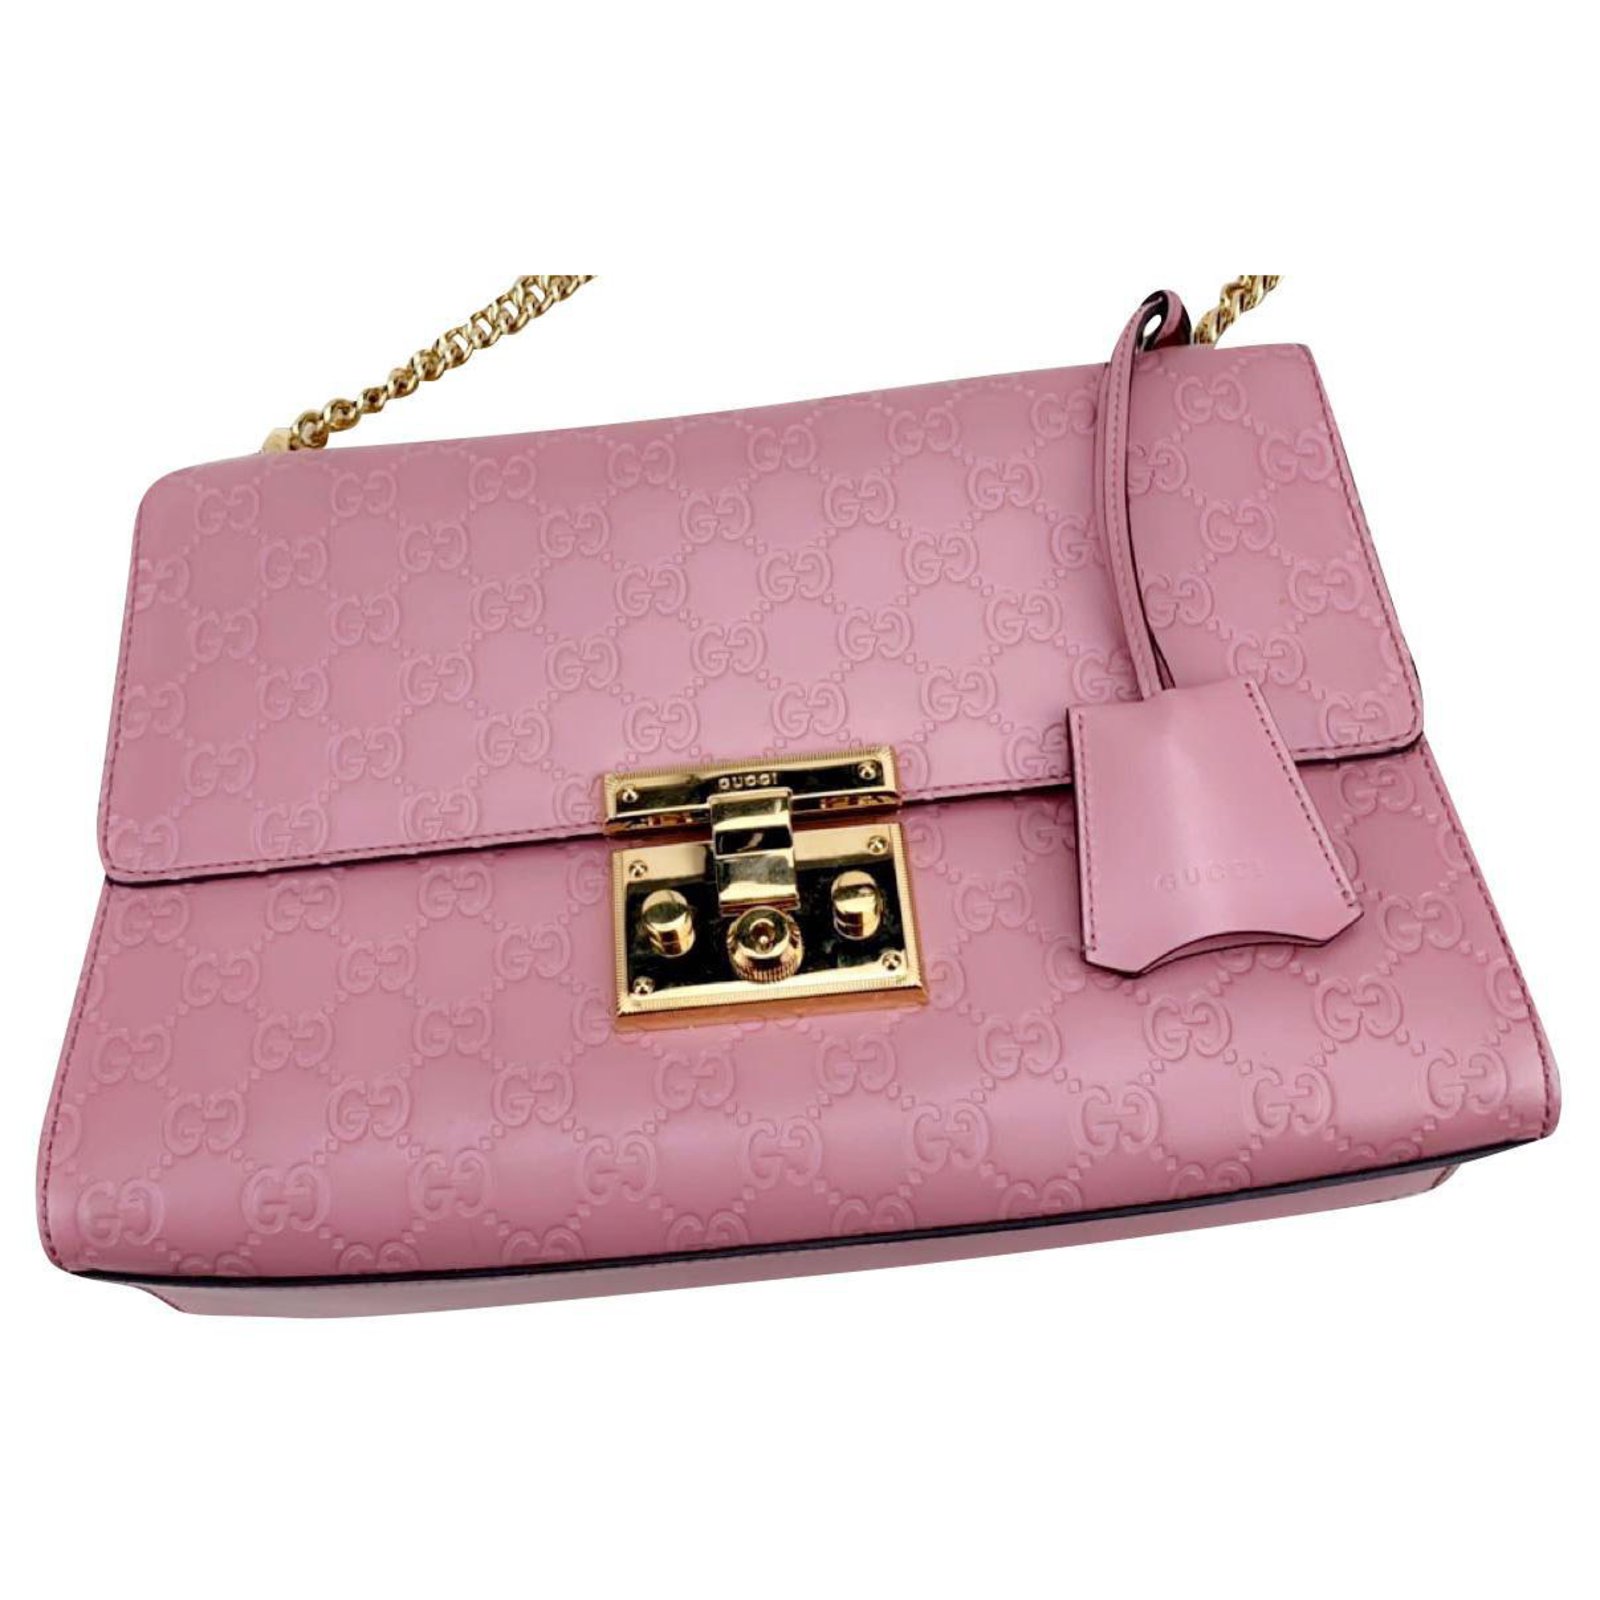 gucci padlock bag pink